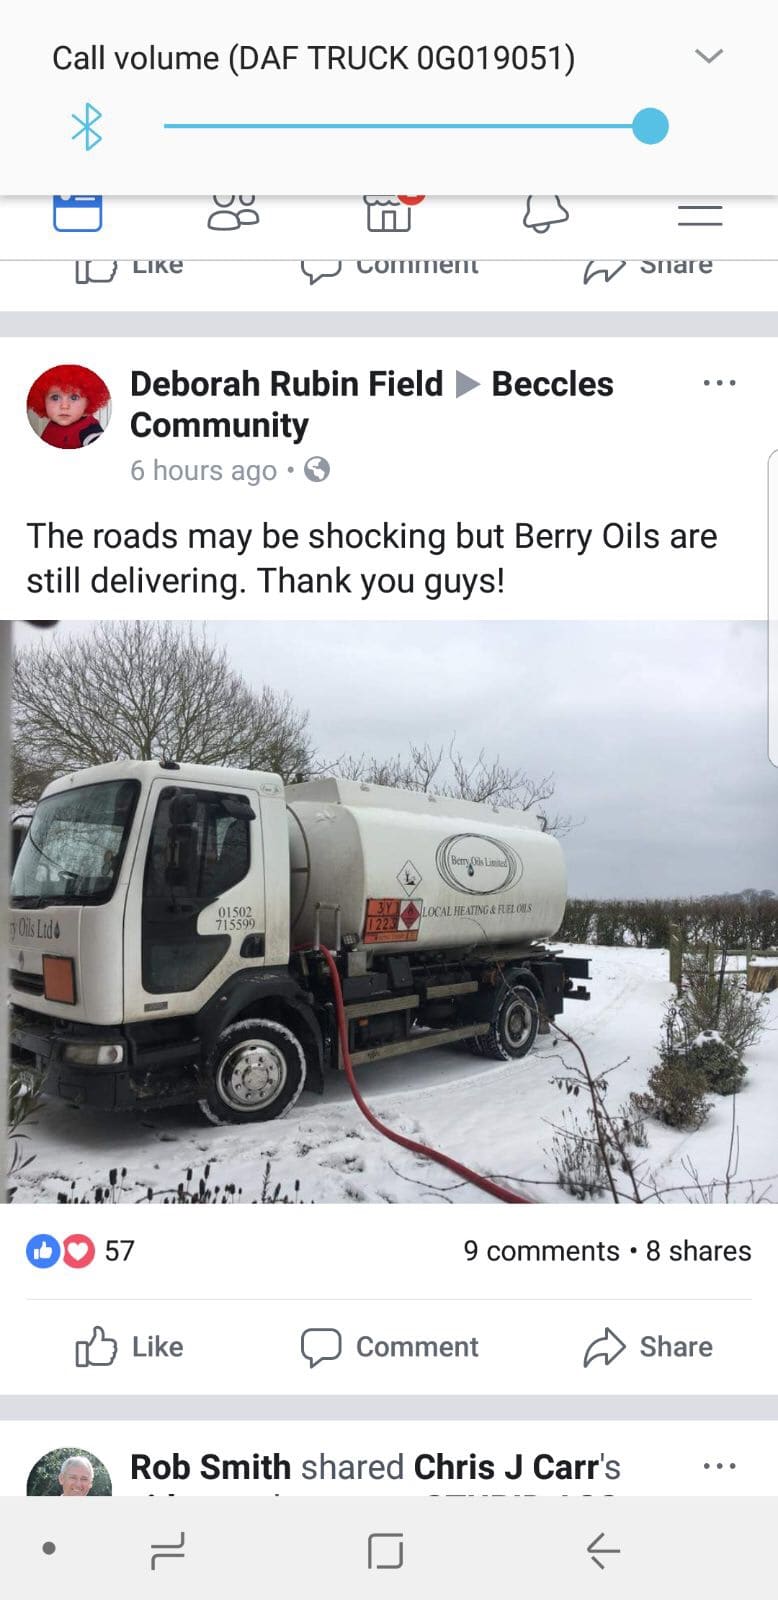 Berry Oils Ltd Beccles 01502 715599